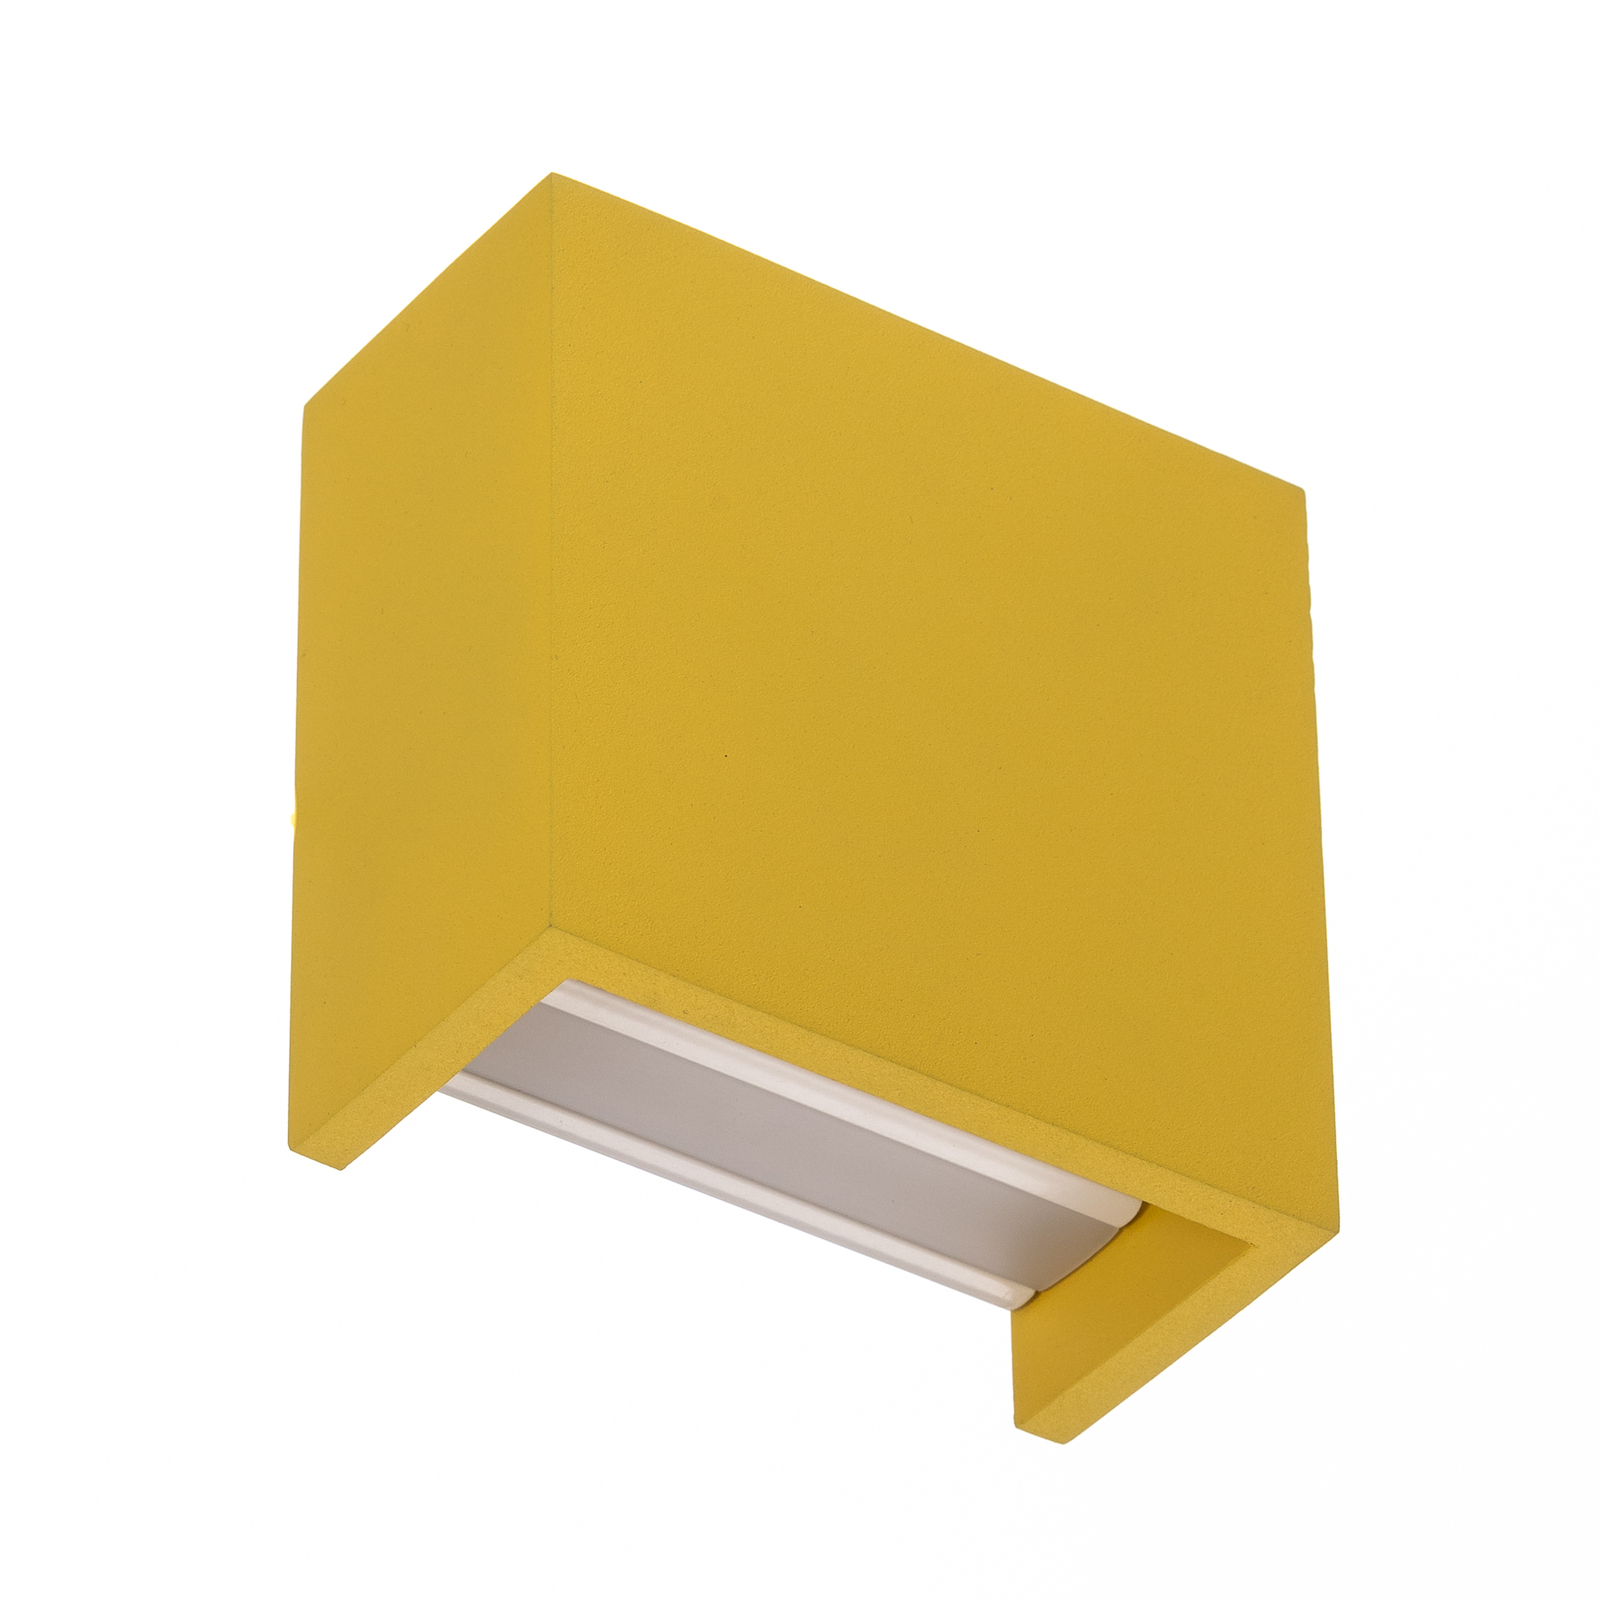 Gianto LED wall light up/down, yellow